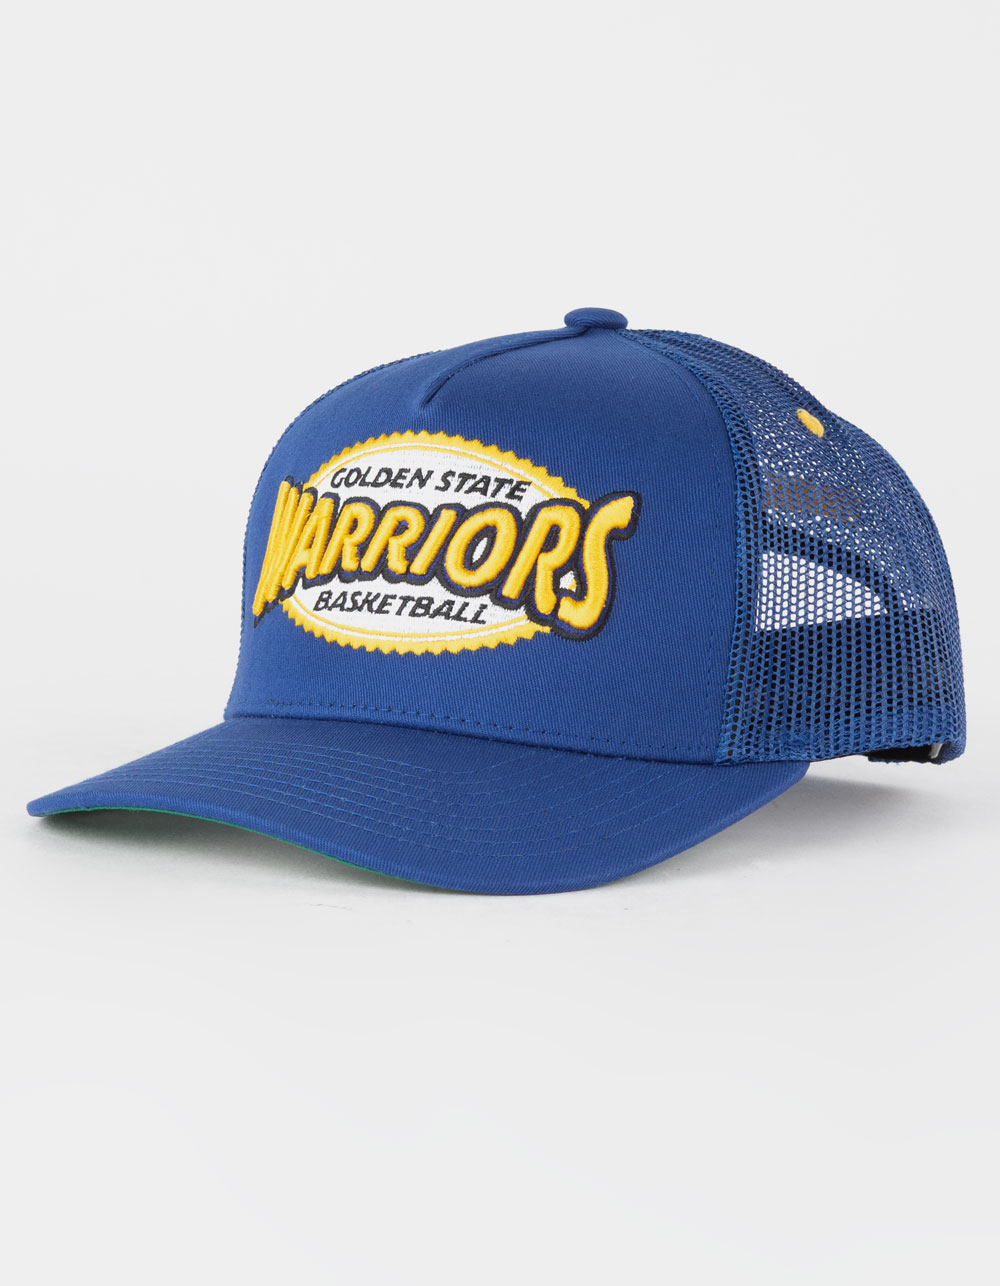 Golden State Warriors Lanyard Two Tone Style - Sports Fan Shop